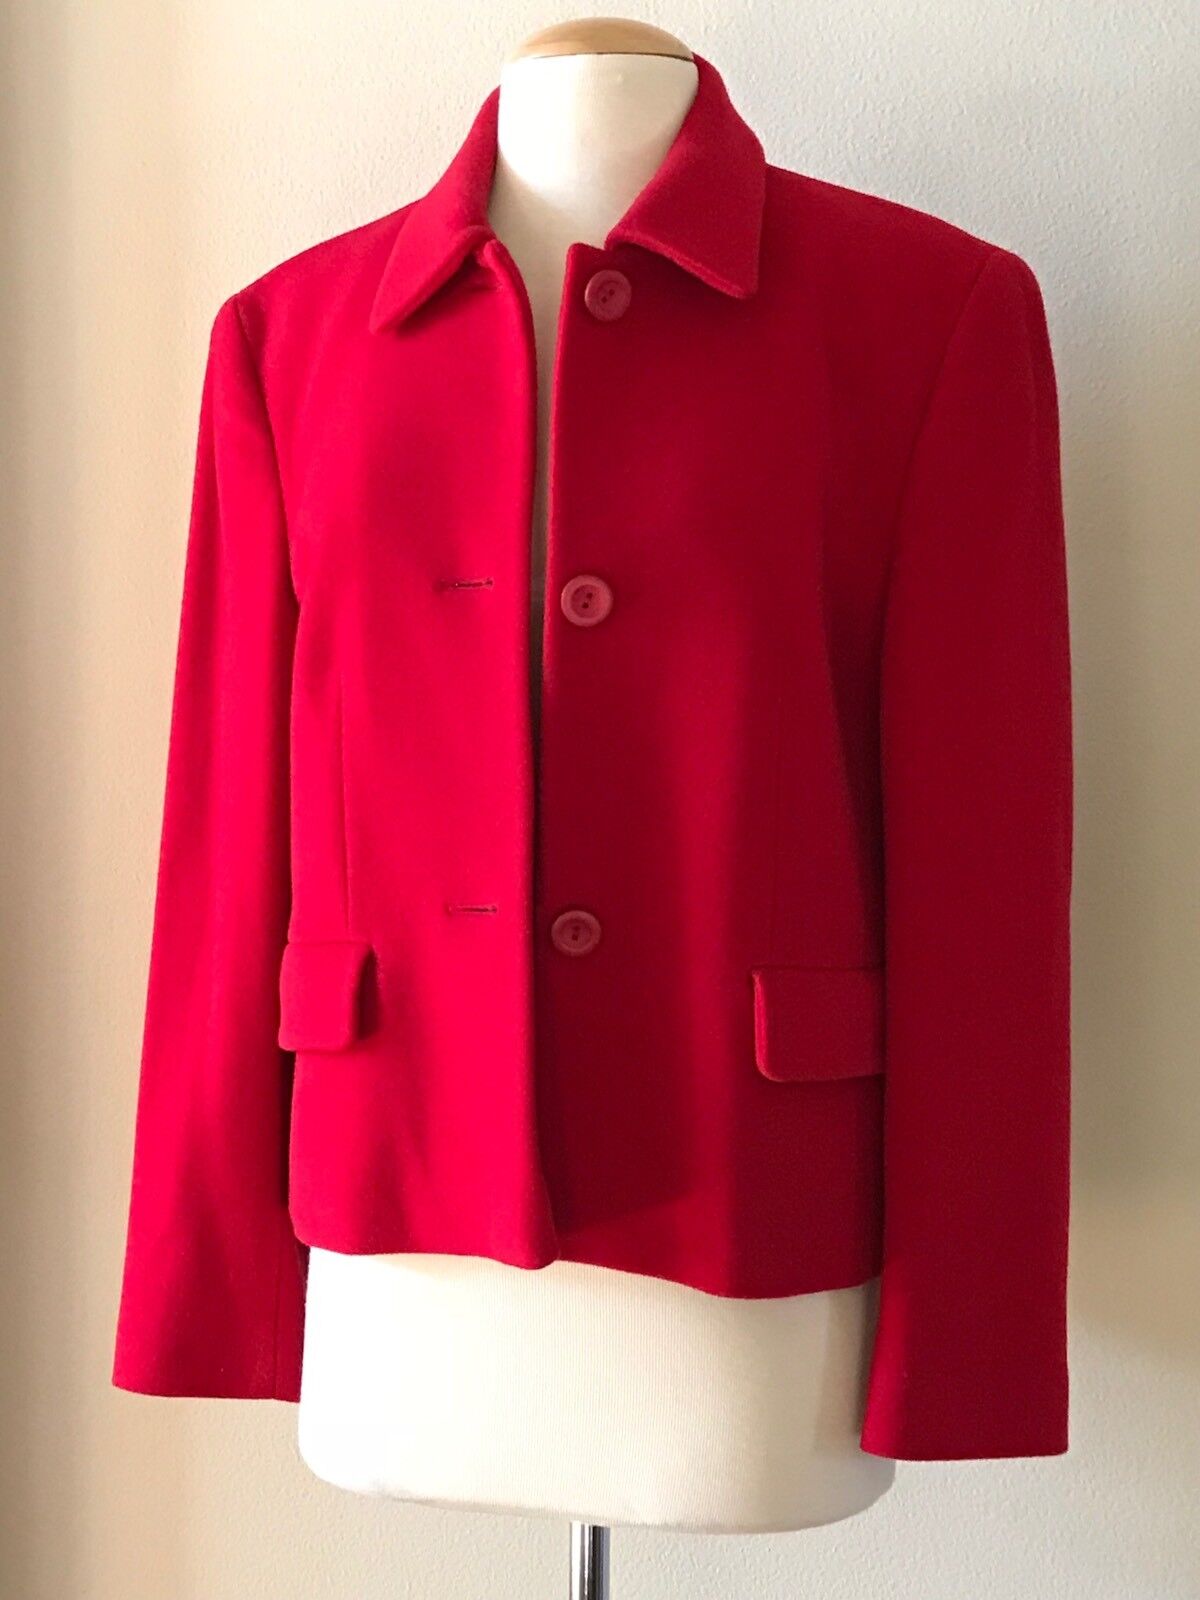 HELENE BERMAN London Red Wool Cashmere Jacket Blazer Size M ENGLAND